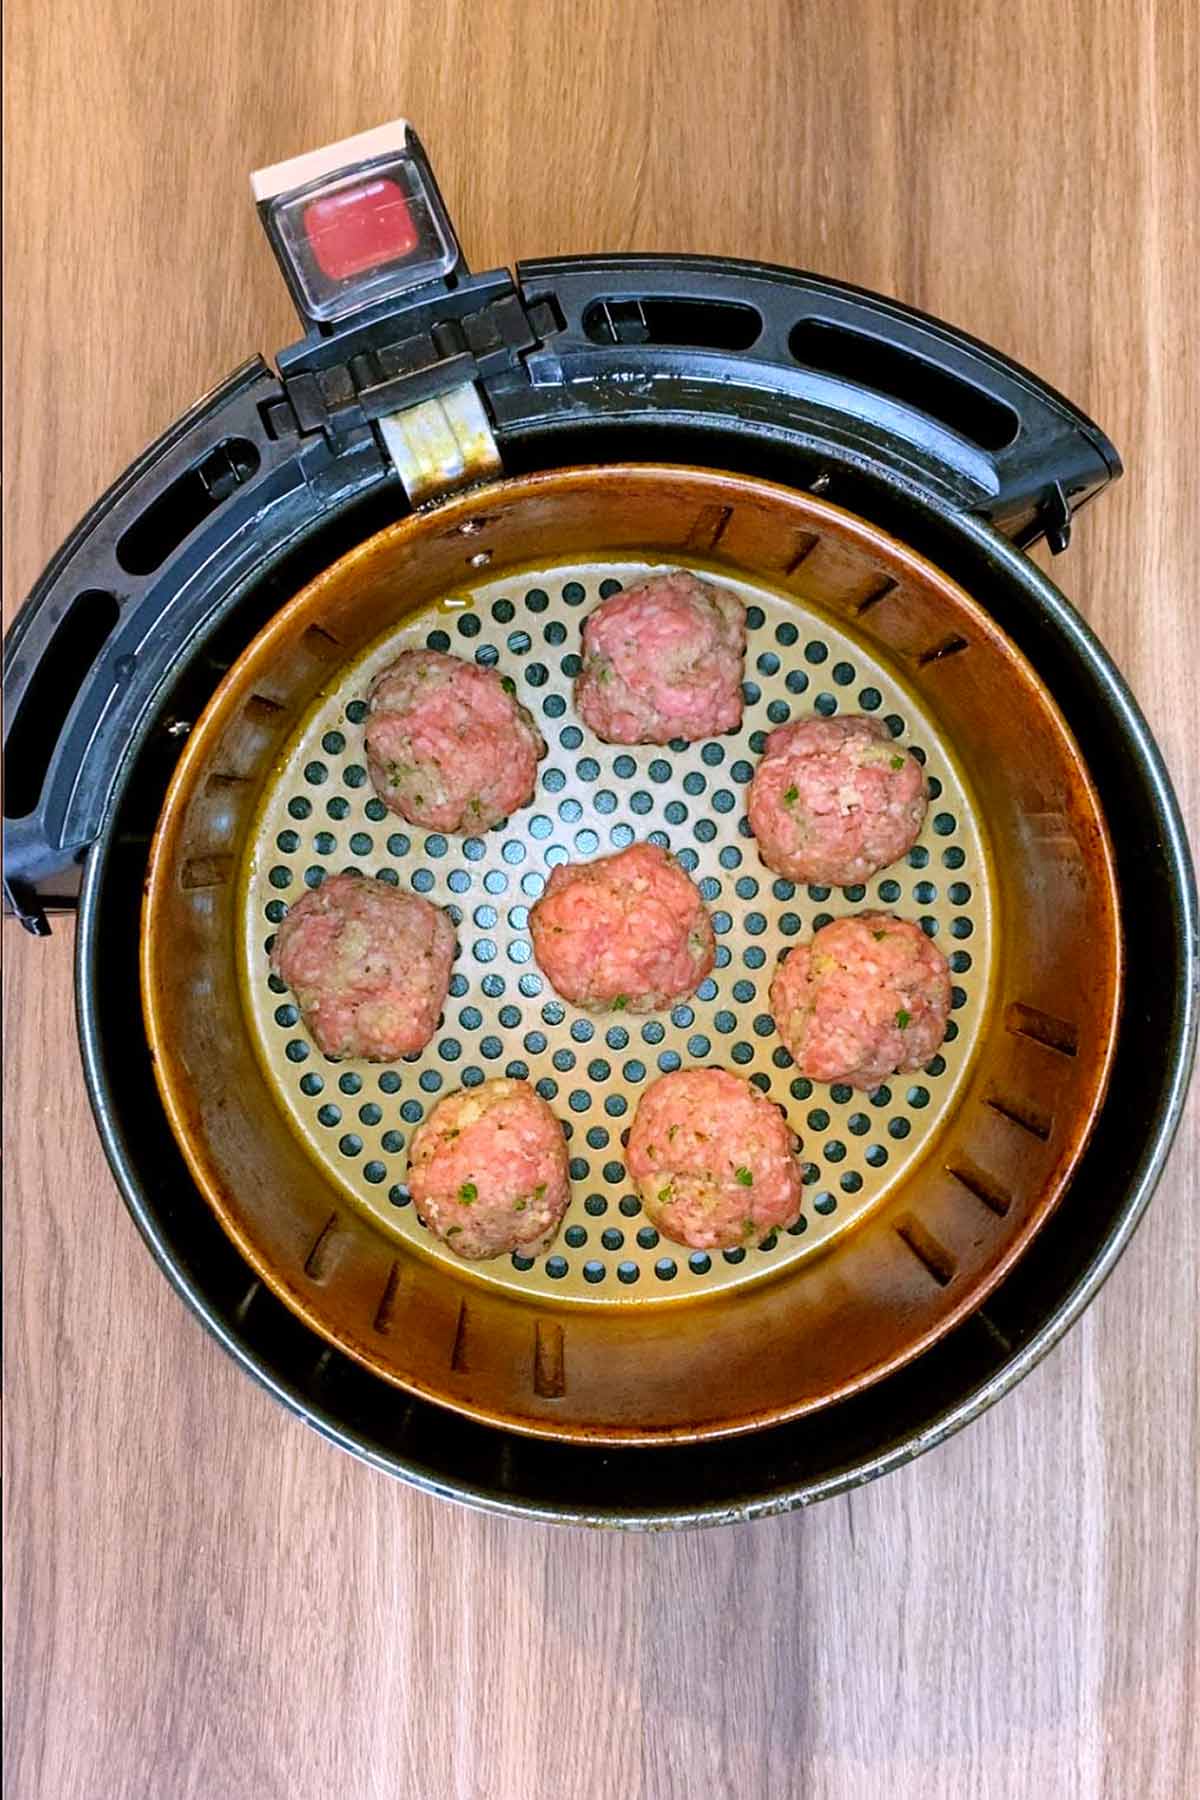 Eight uncooked meatballs in an air fryer basket.